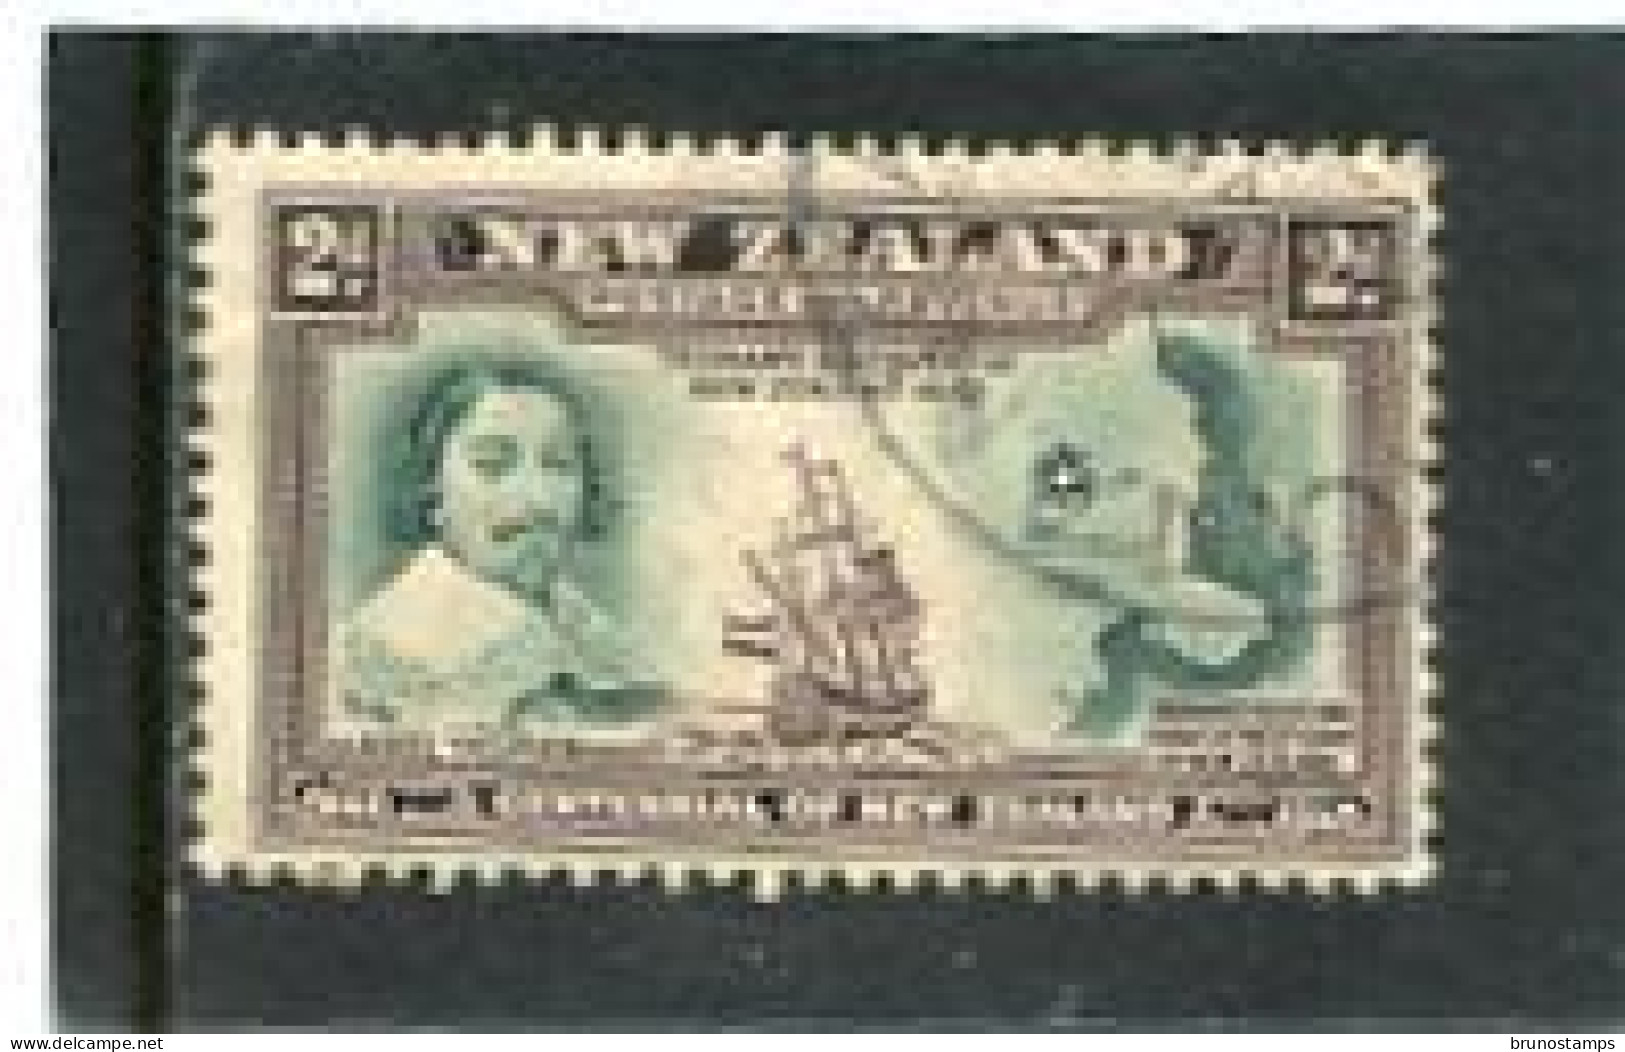 NEW ZEALAND - 1940  2d  BRITISH SOVEREIGNTY  FINE USED  SG 616 - Oblitérés